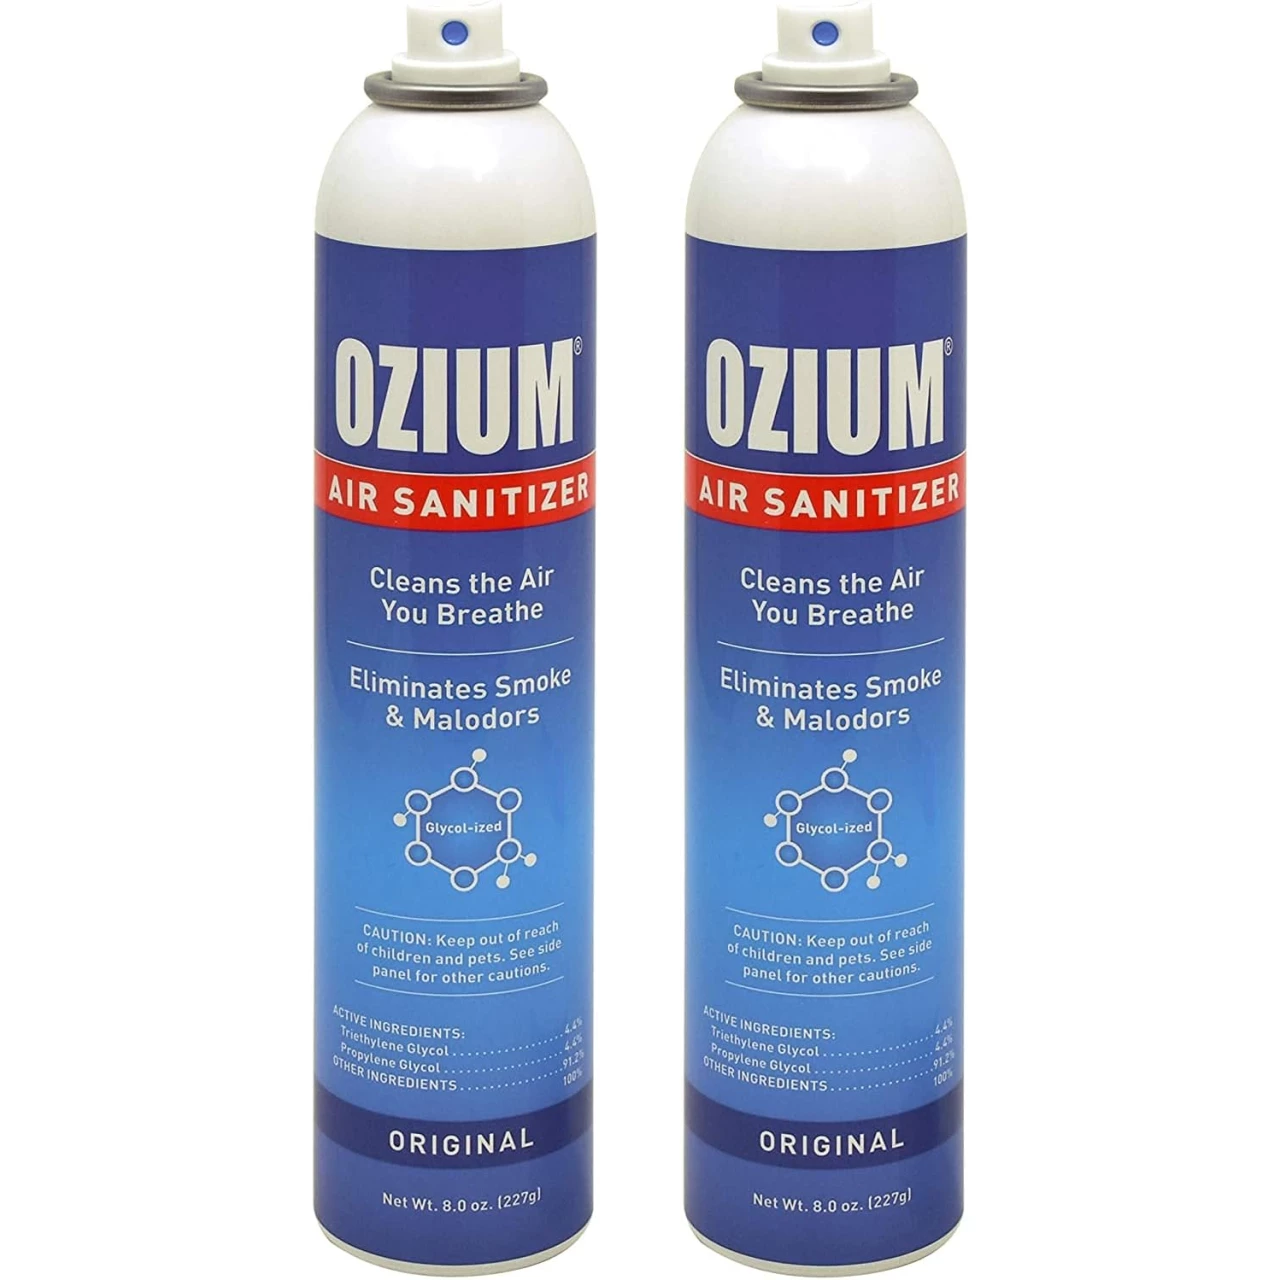 Ozium Air Sanitizer Reduces Airborne Bacteria Eliminates Smoke &amp; Malodors Spray Air Freshener, Original, 8 Oz (2 Pack), Natural